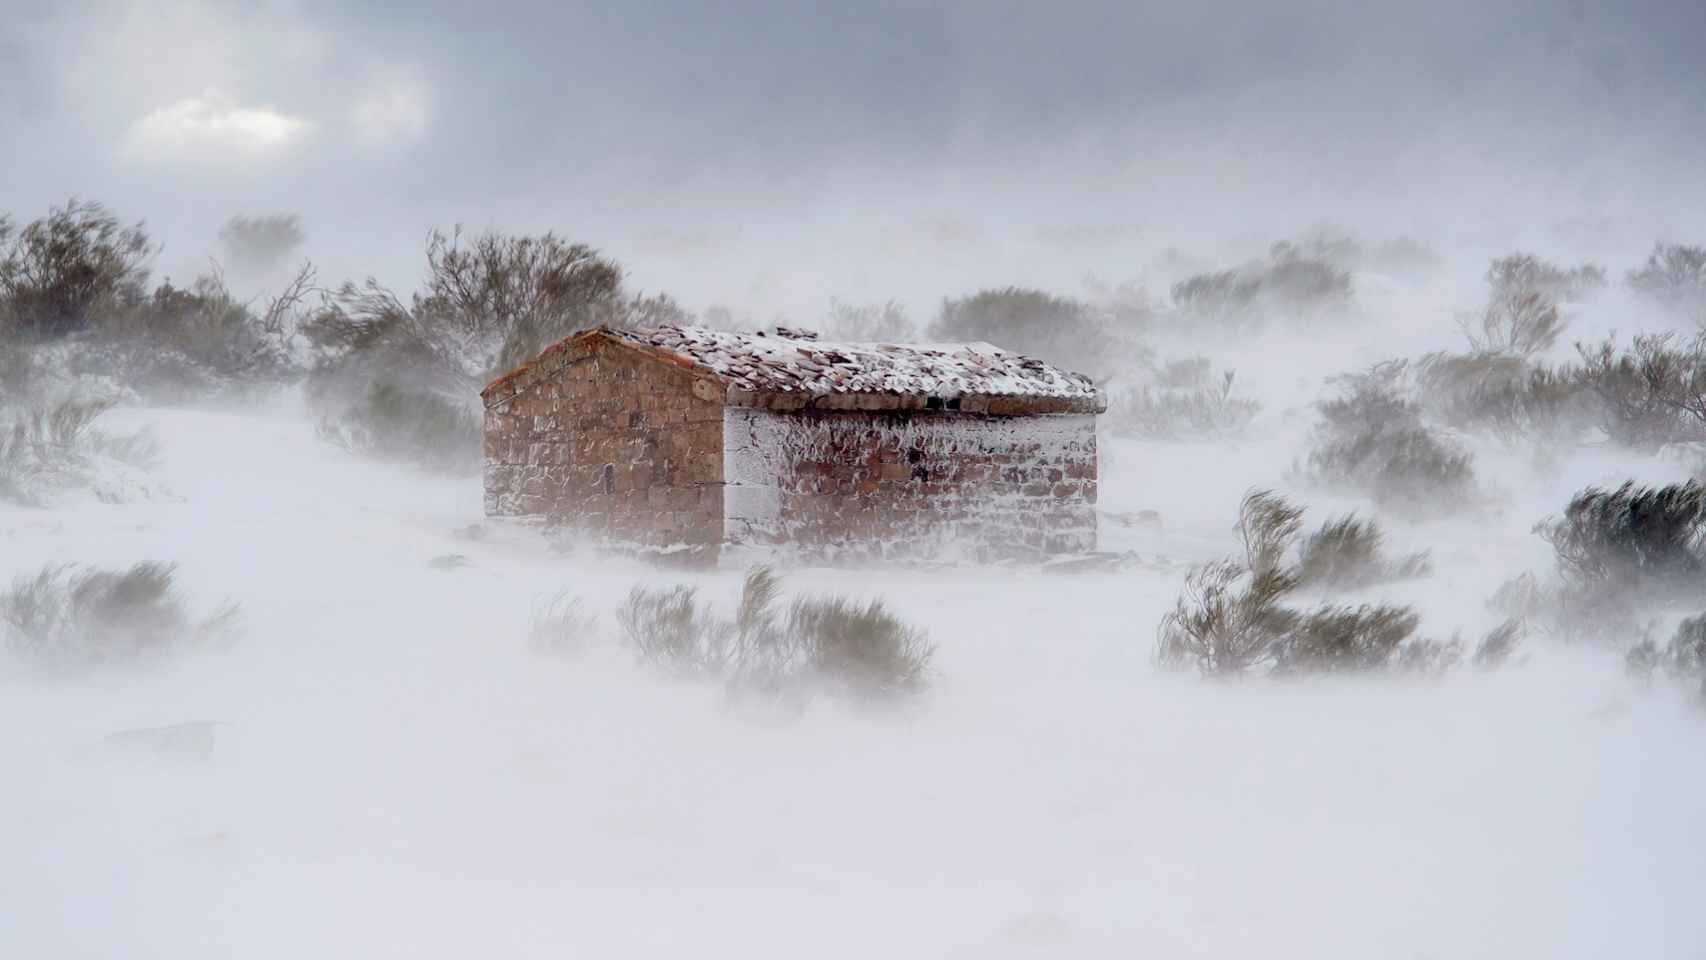 Paisaje nevado cerca de la localidad cántabra de Brañavieja. EFE/Pedro Puente Hoyos